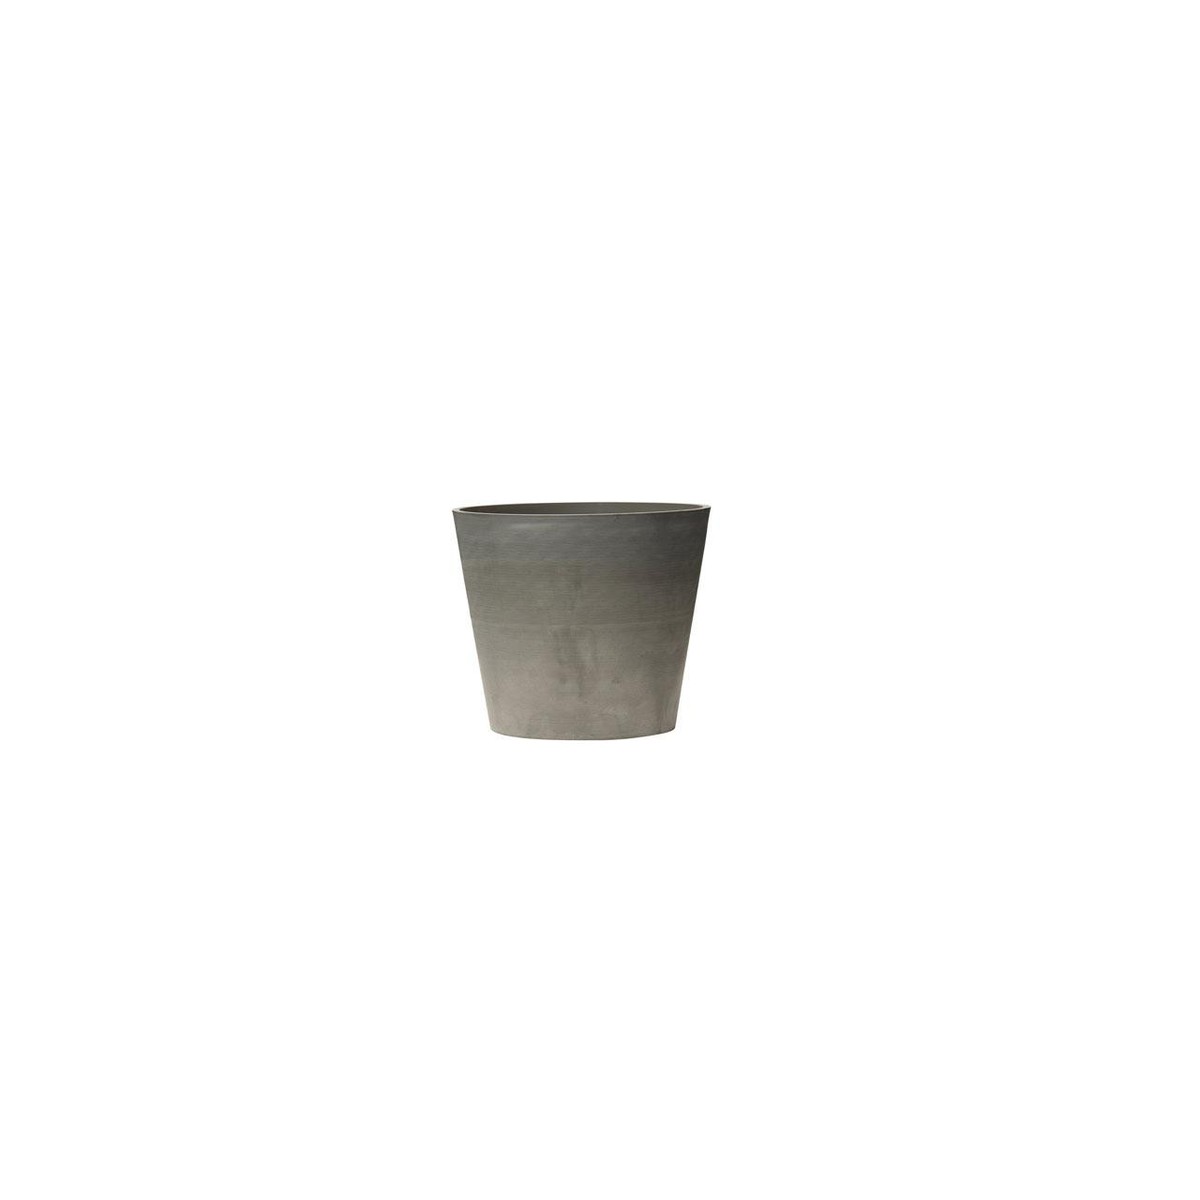  NOVA VITA Pot à cône tronqué 30 Artplast Gris mastic Ø278x247mm 10L